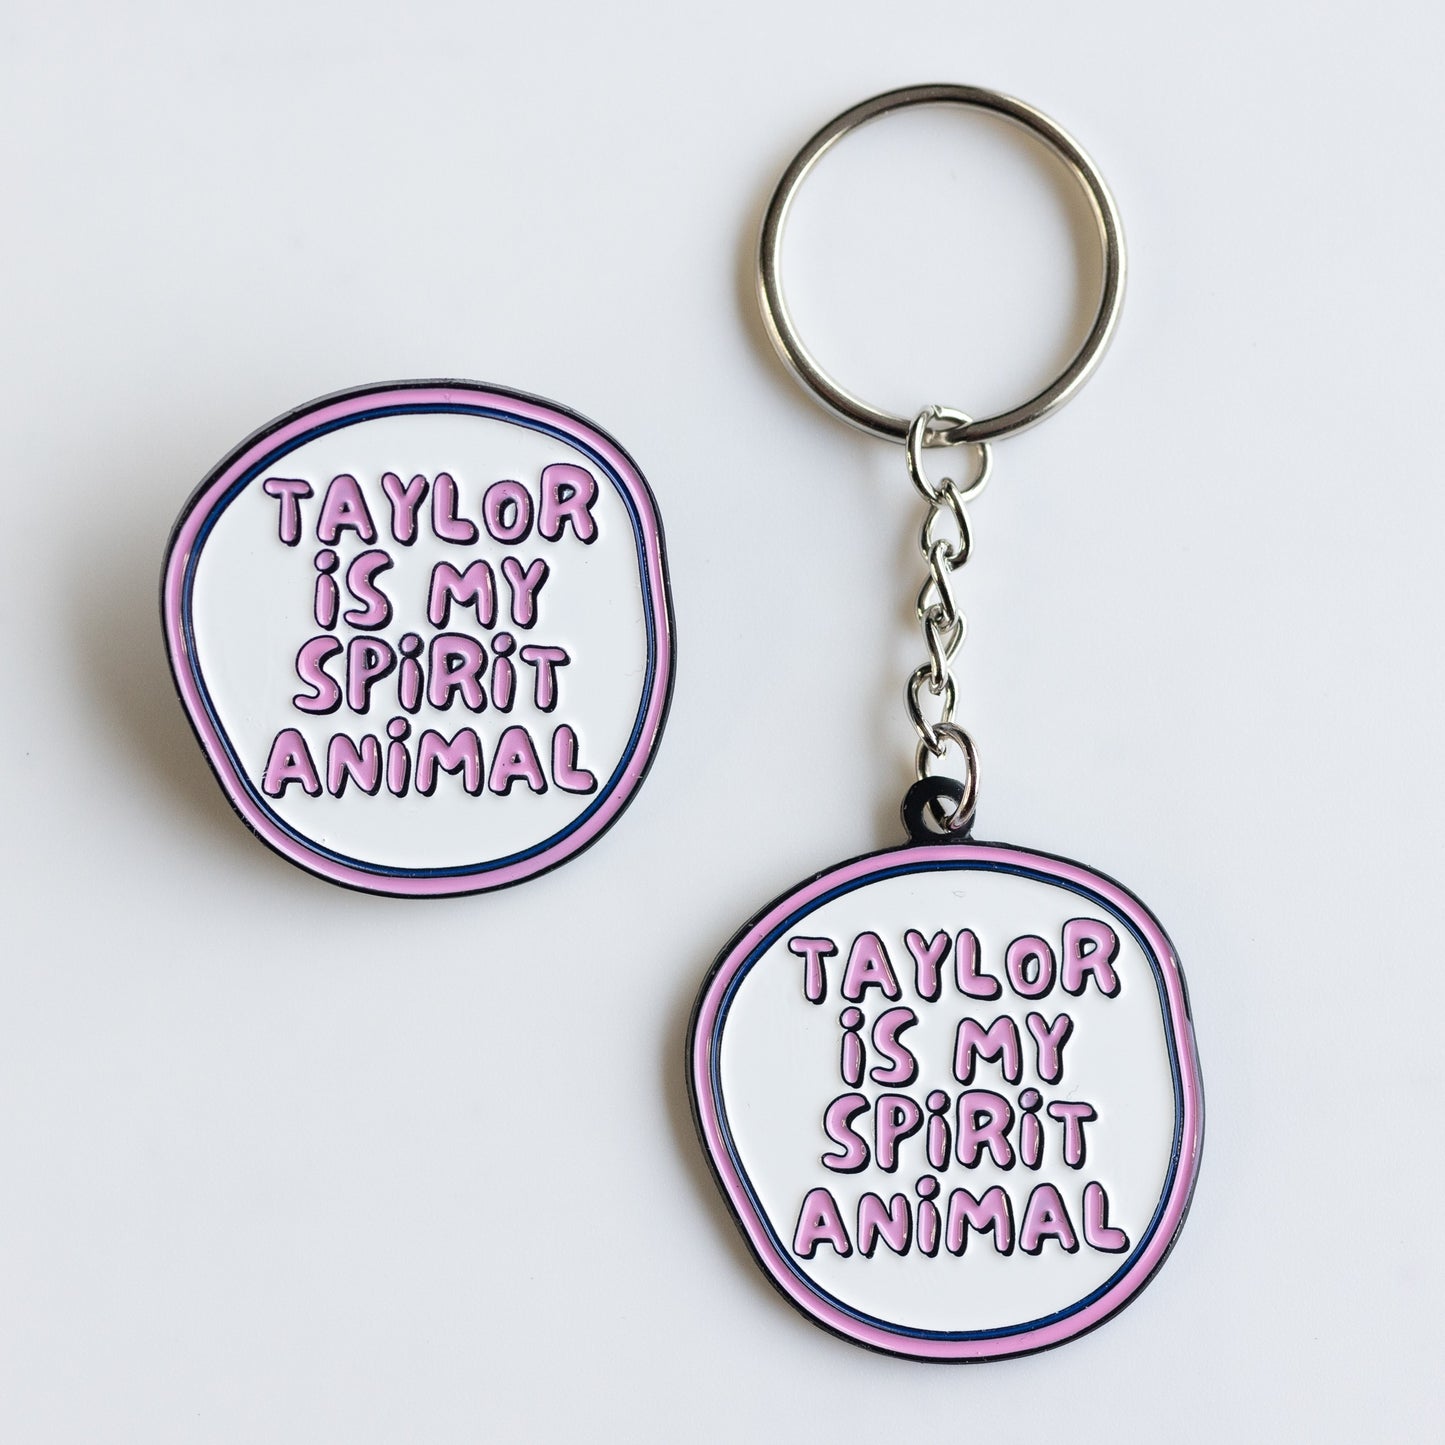 white and pink enamel: Taylor is my spirit animal